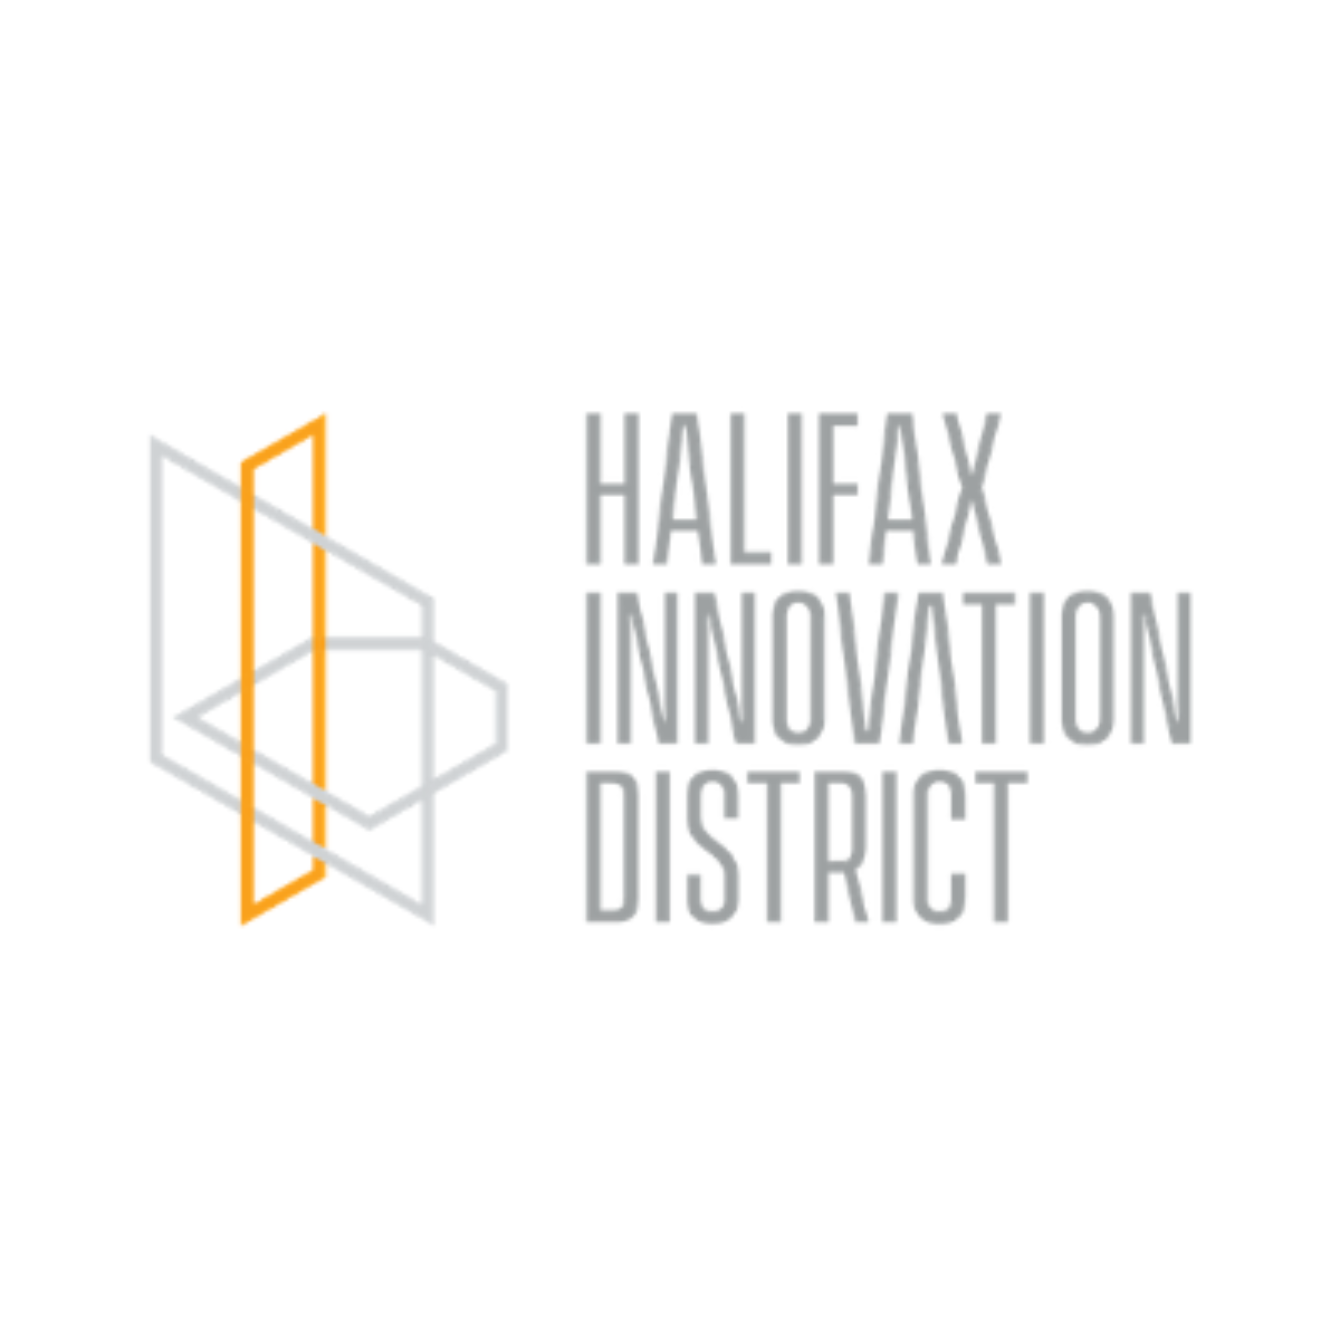 Halifax Innovation District